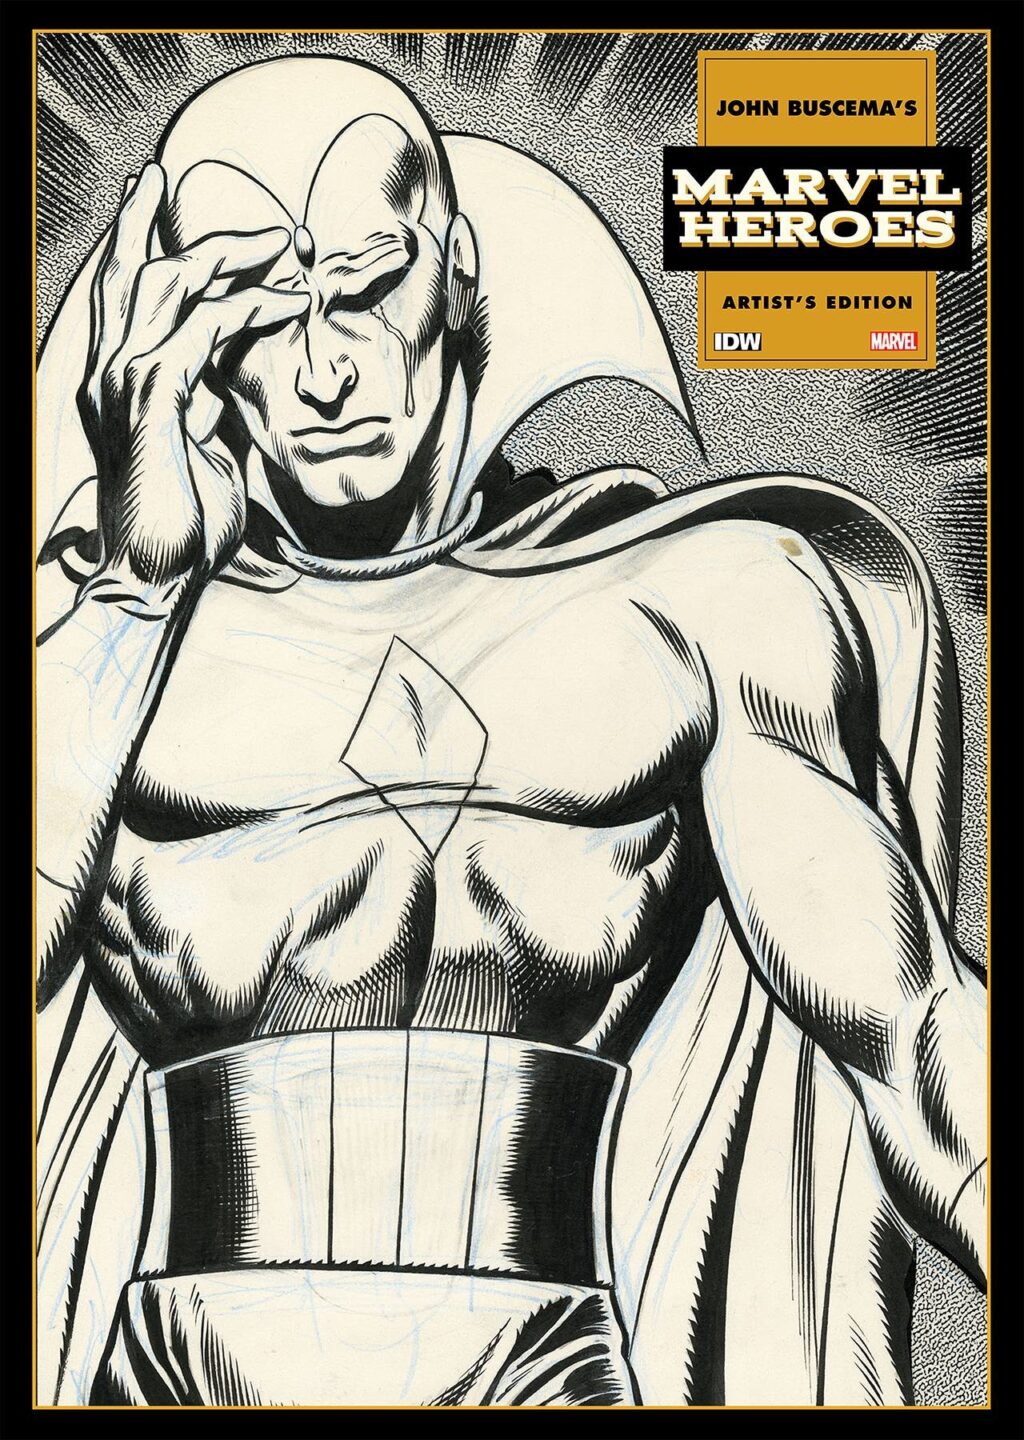 John Buscema's Marvel Heroes Artist's Edition cover prelim